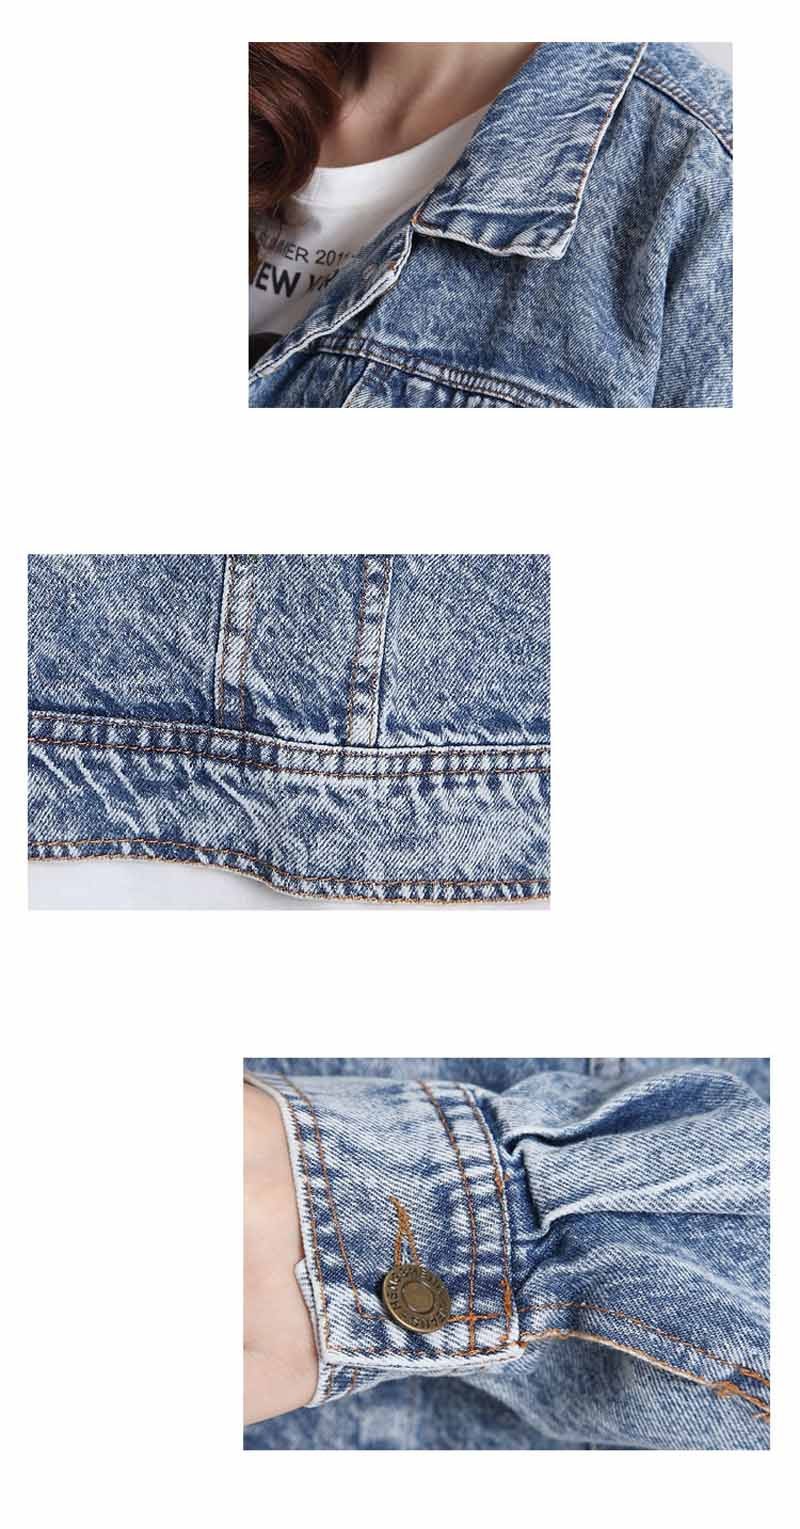 Jean Jacket 2015 Women Fashion Jeans Denim Jacket Coats Casual Casacos Jaqueta Femininos Outerwear For Women CL03834